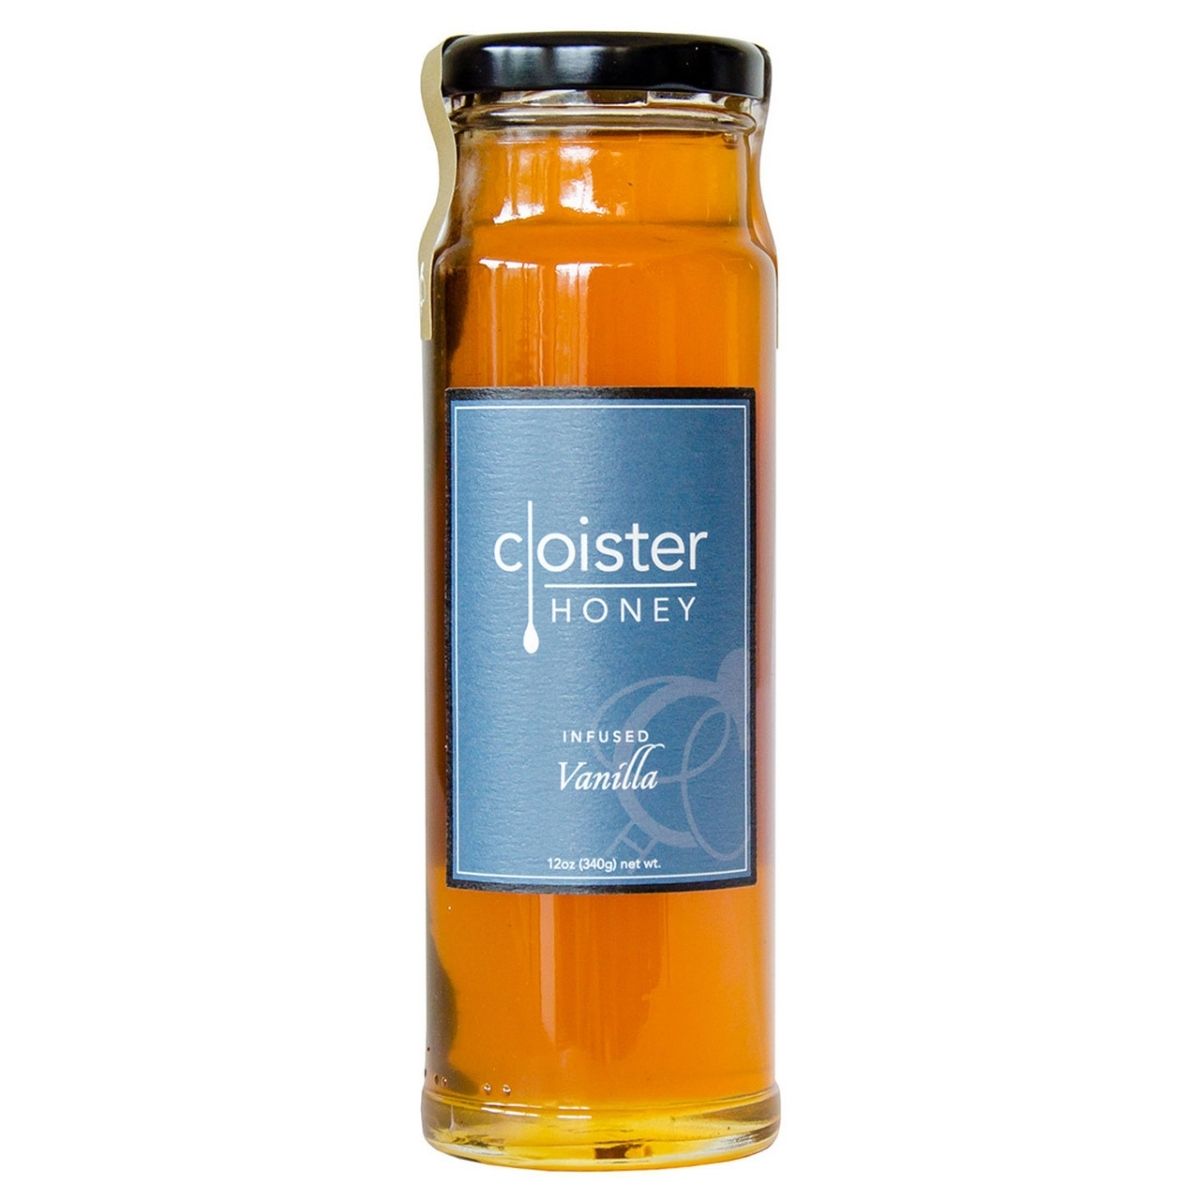 Cloister Vanilla Honey great for tea